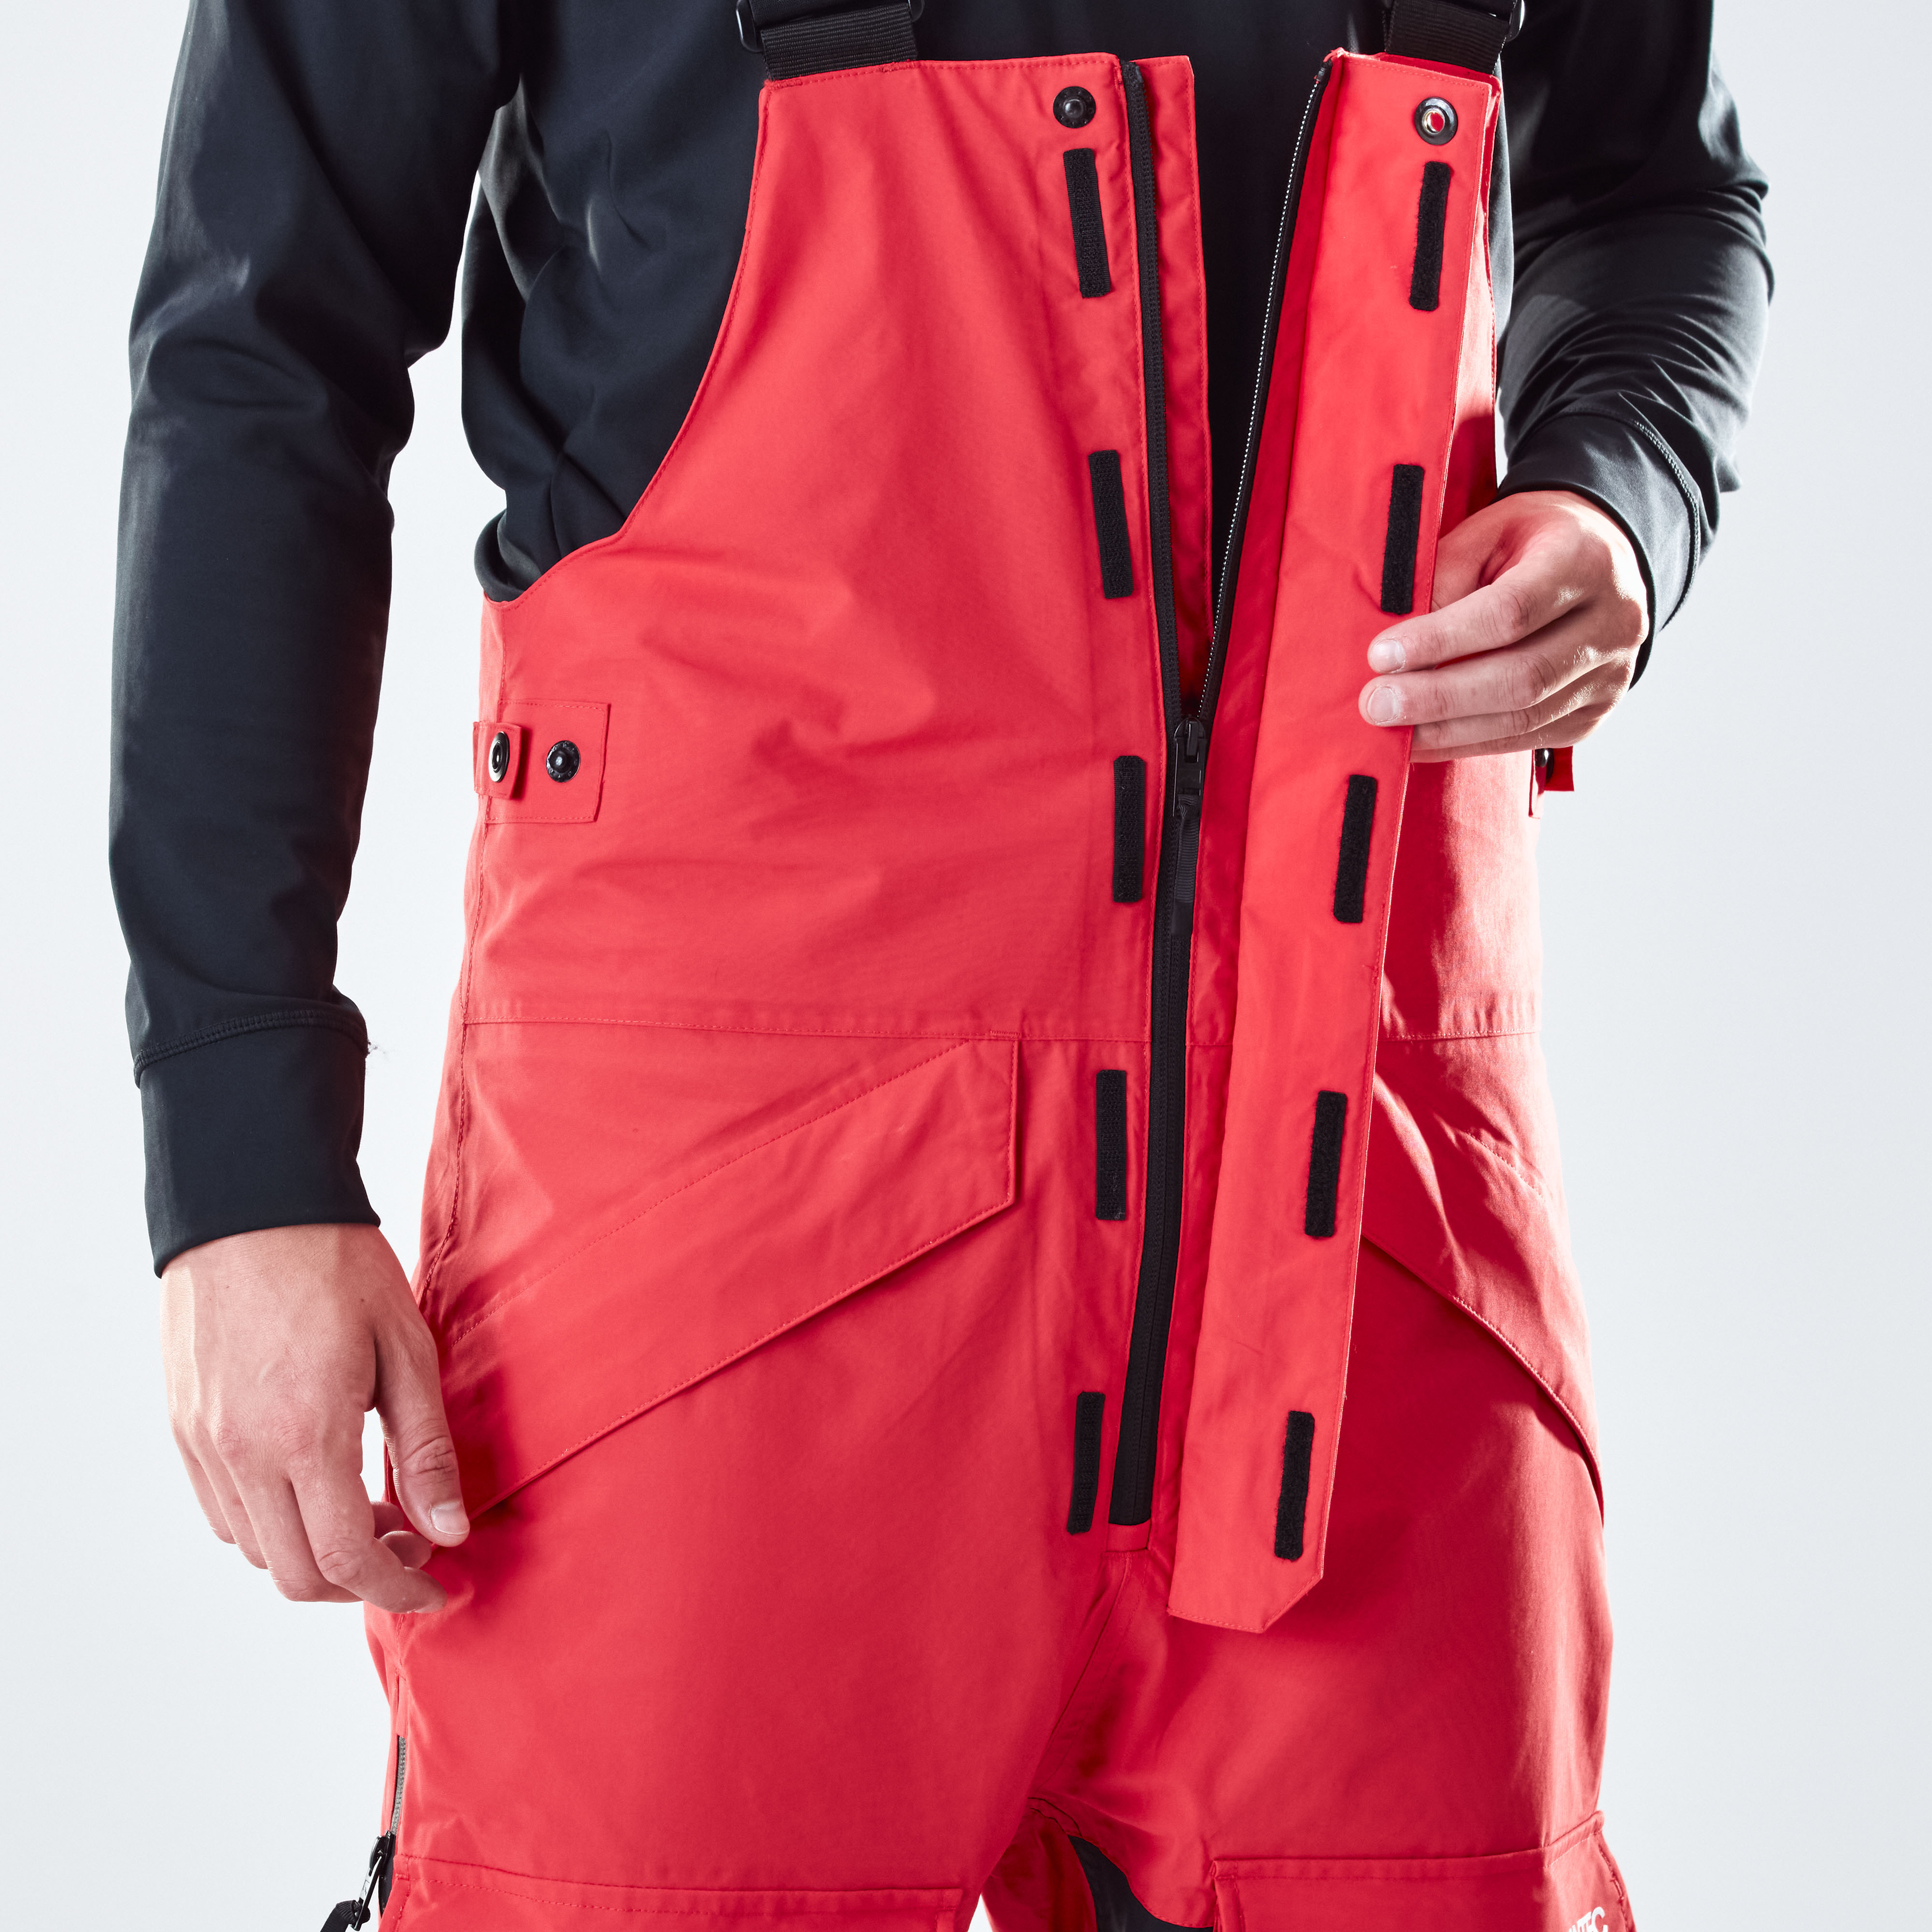 Fawk 2020 Ski Pants Red/Black | Montecwear.com